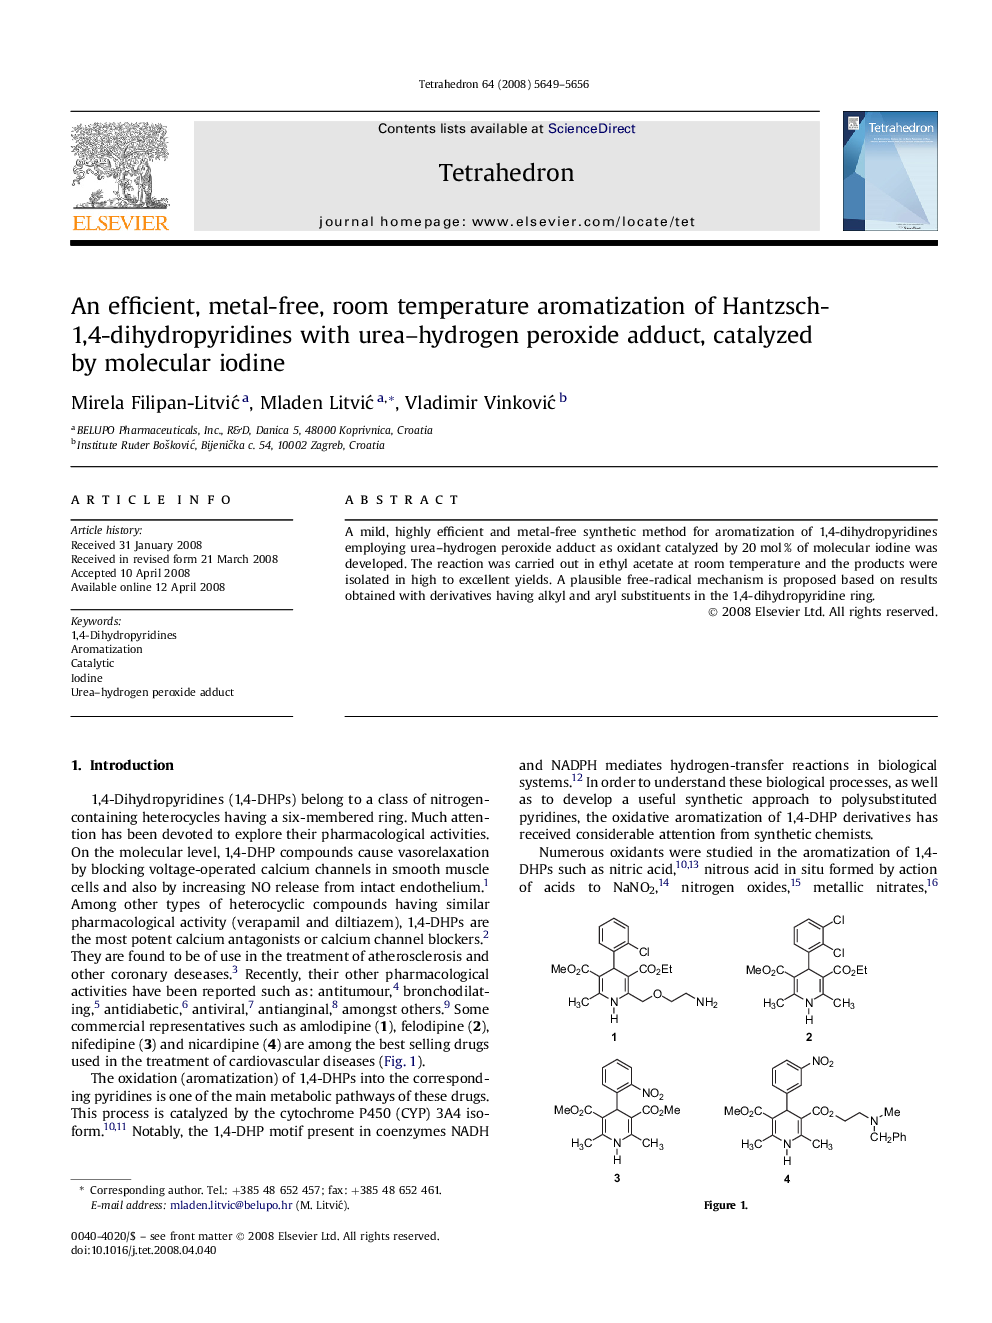 An efficient, metal-free, room temperature aromatization of Hantzsch-1,4-dihydropyridines with urea-hydrogen peroxide adduct, catalyzed by molecular iodine